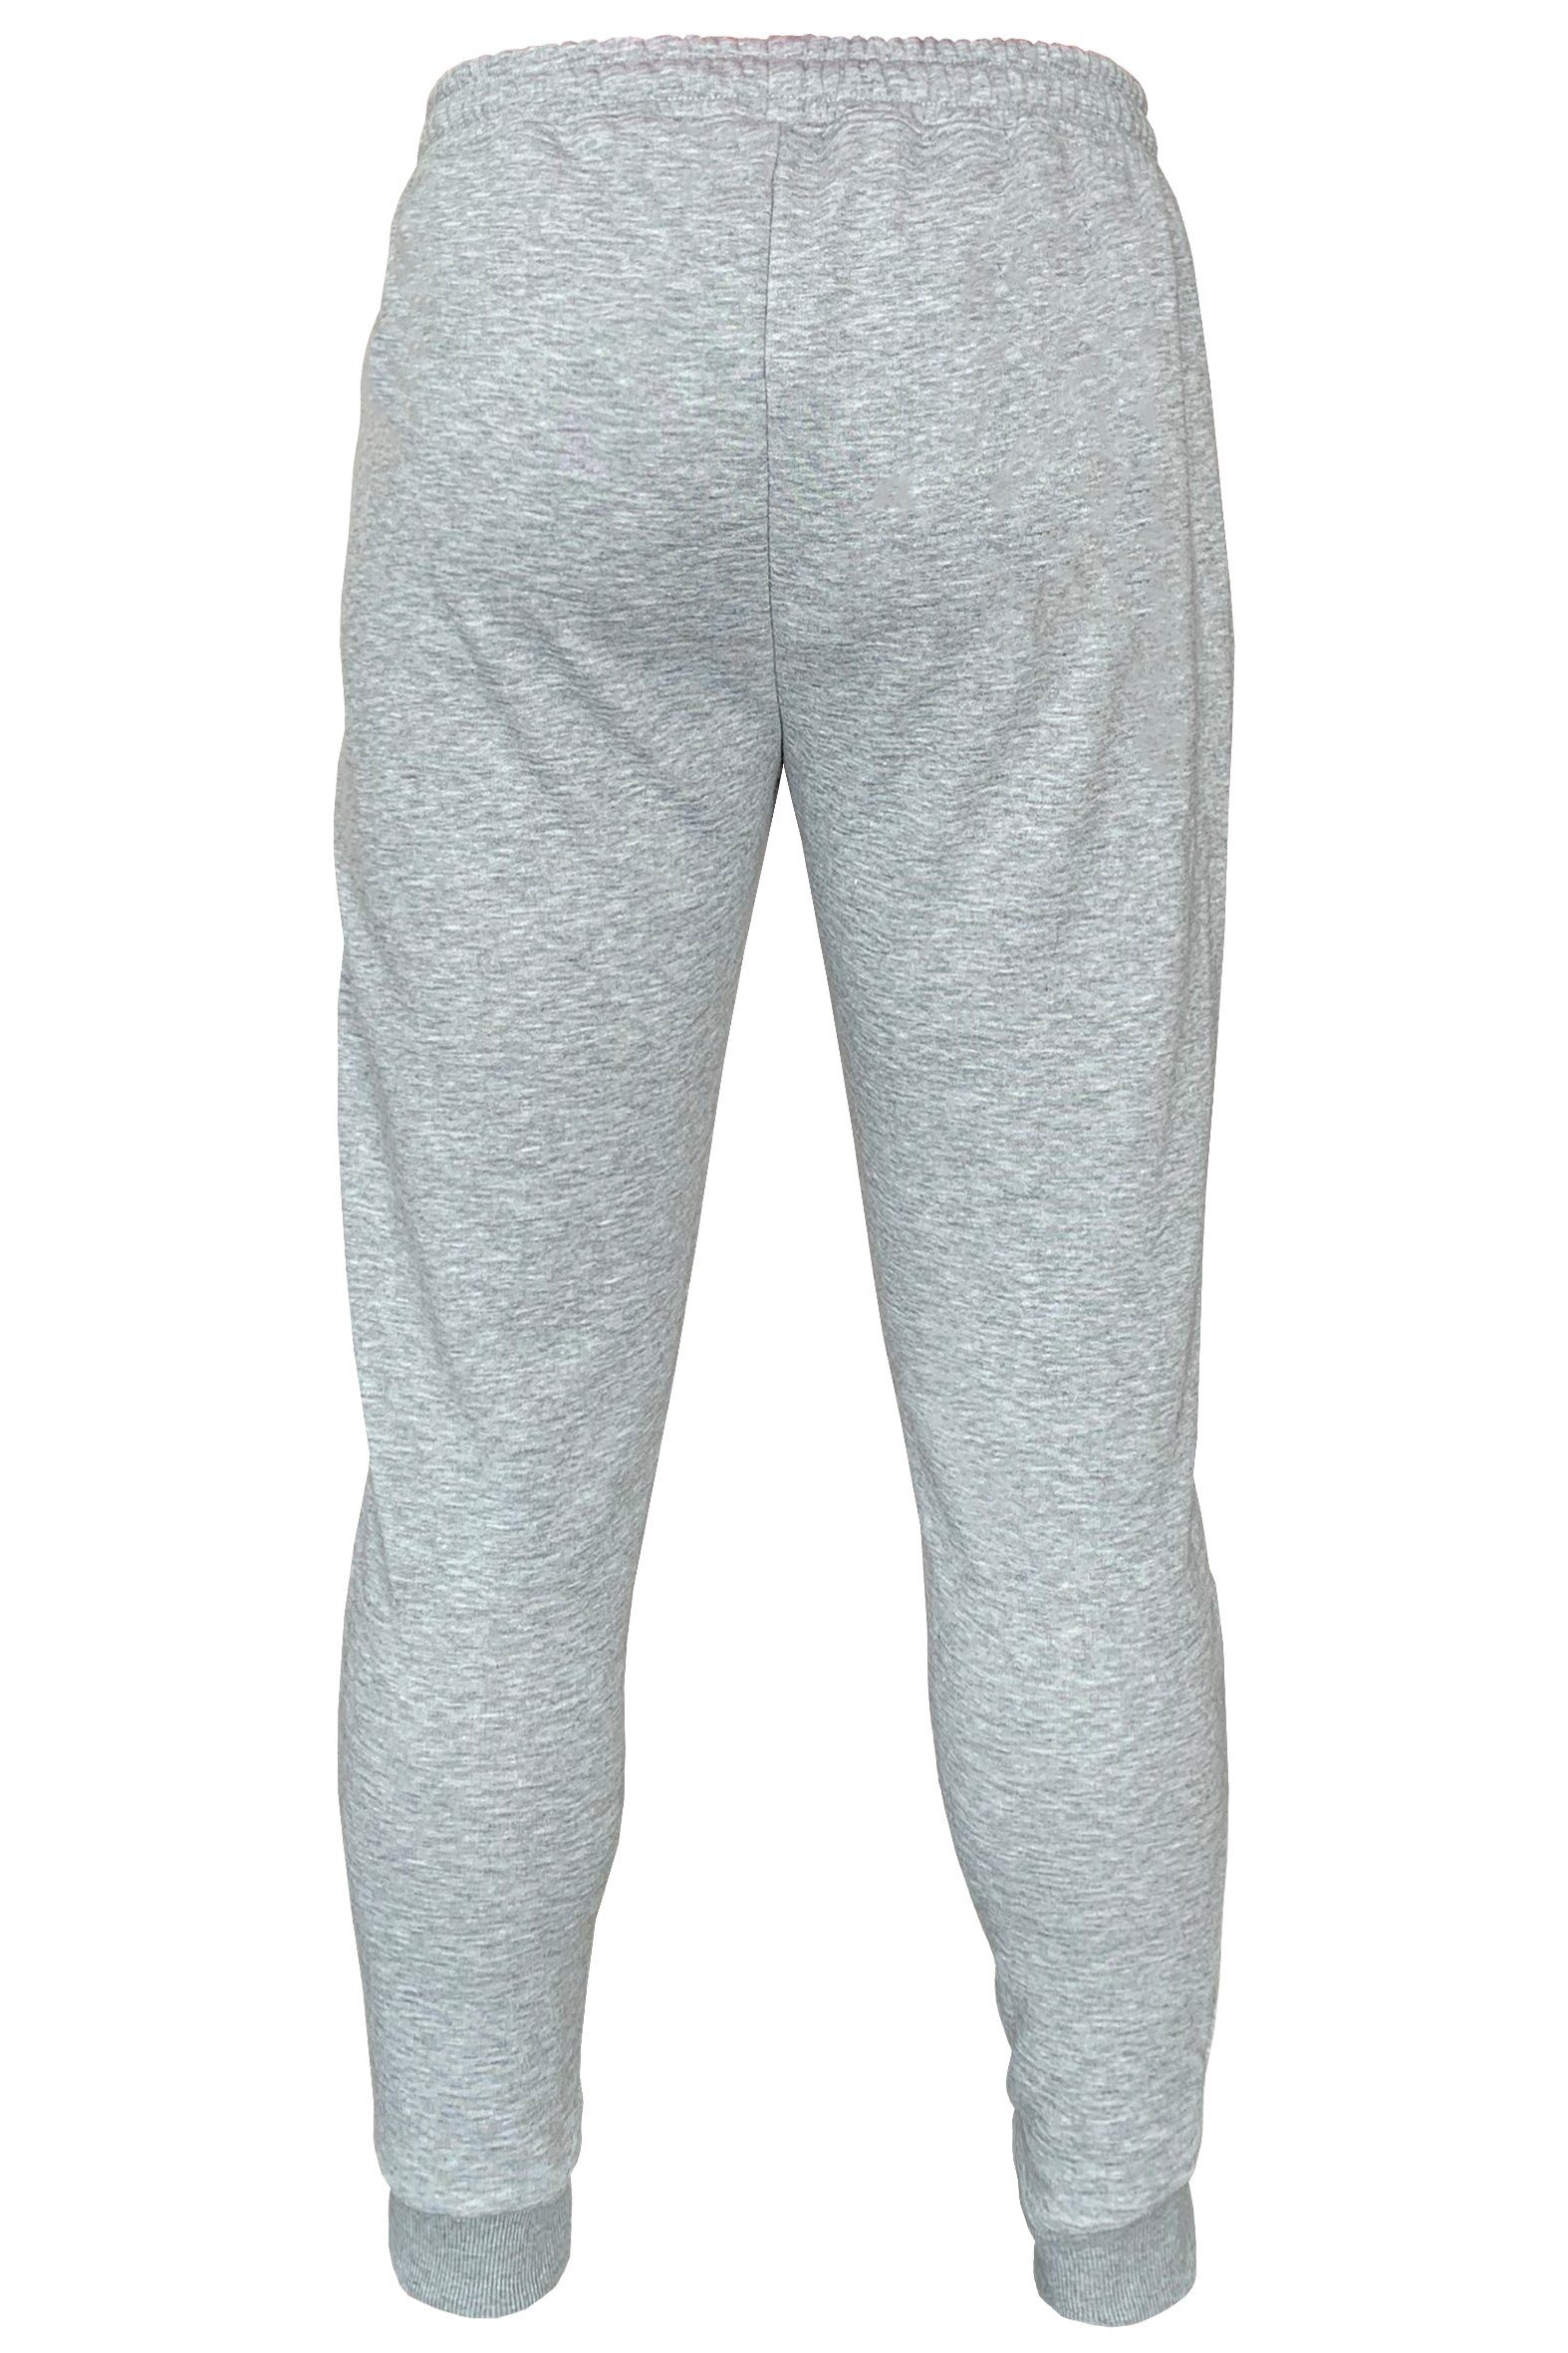 Sweatjogger Stark Soul® Baumwolle elastischem Grau-Melange Sweathose - Jogginghose mit Casual, Bund